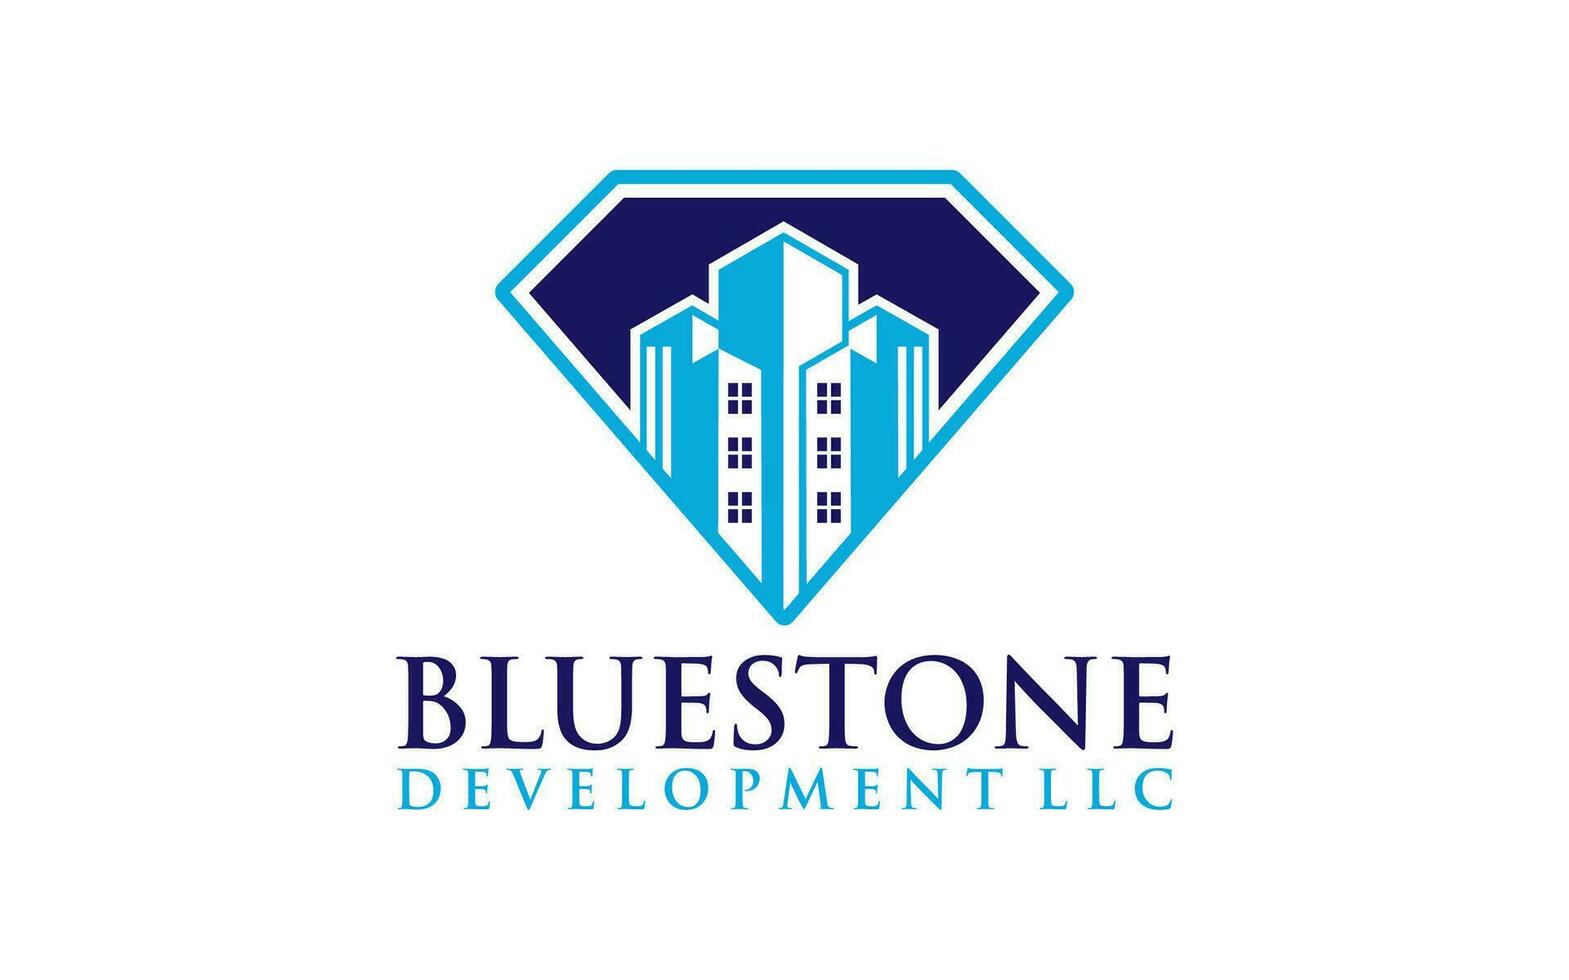 Diamond building business logo. Premium real estate logo. Gem home icon symbol vector